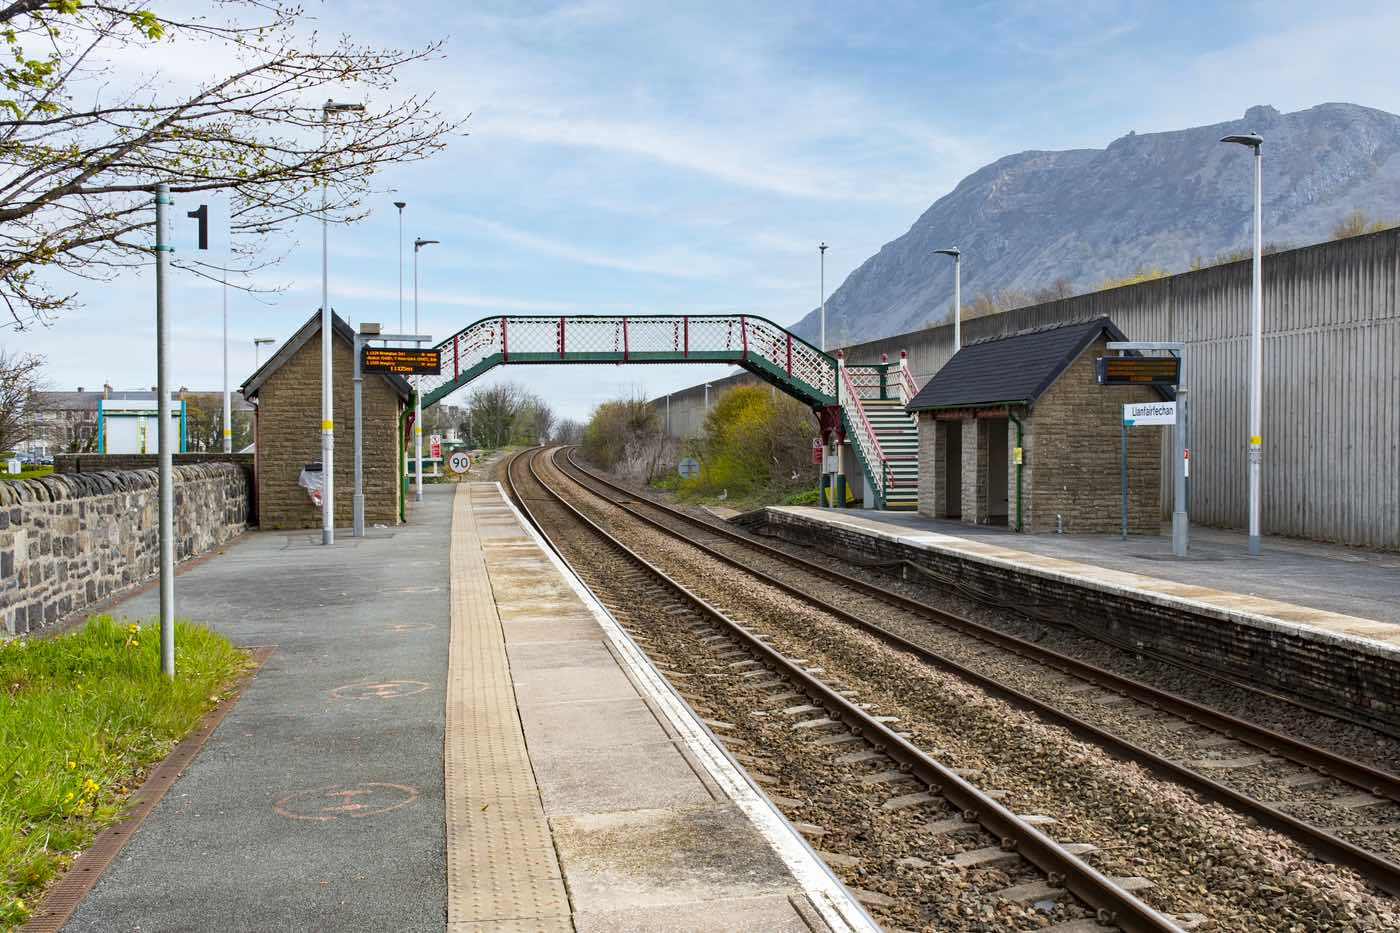 Llanfairfechan railway station